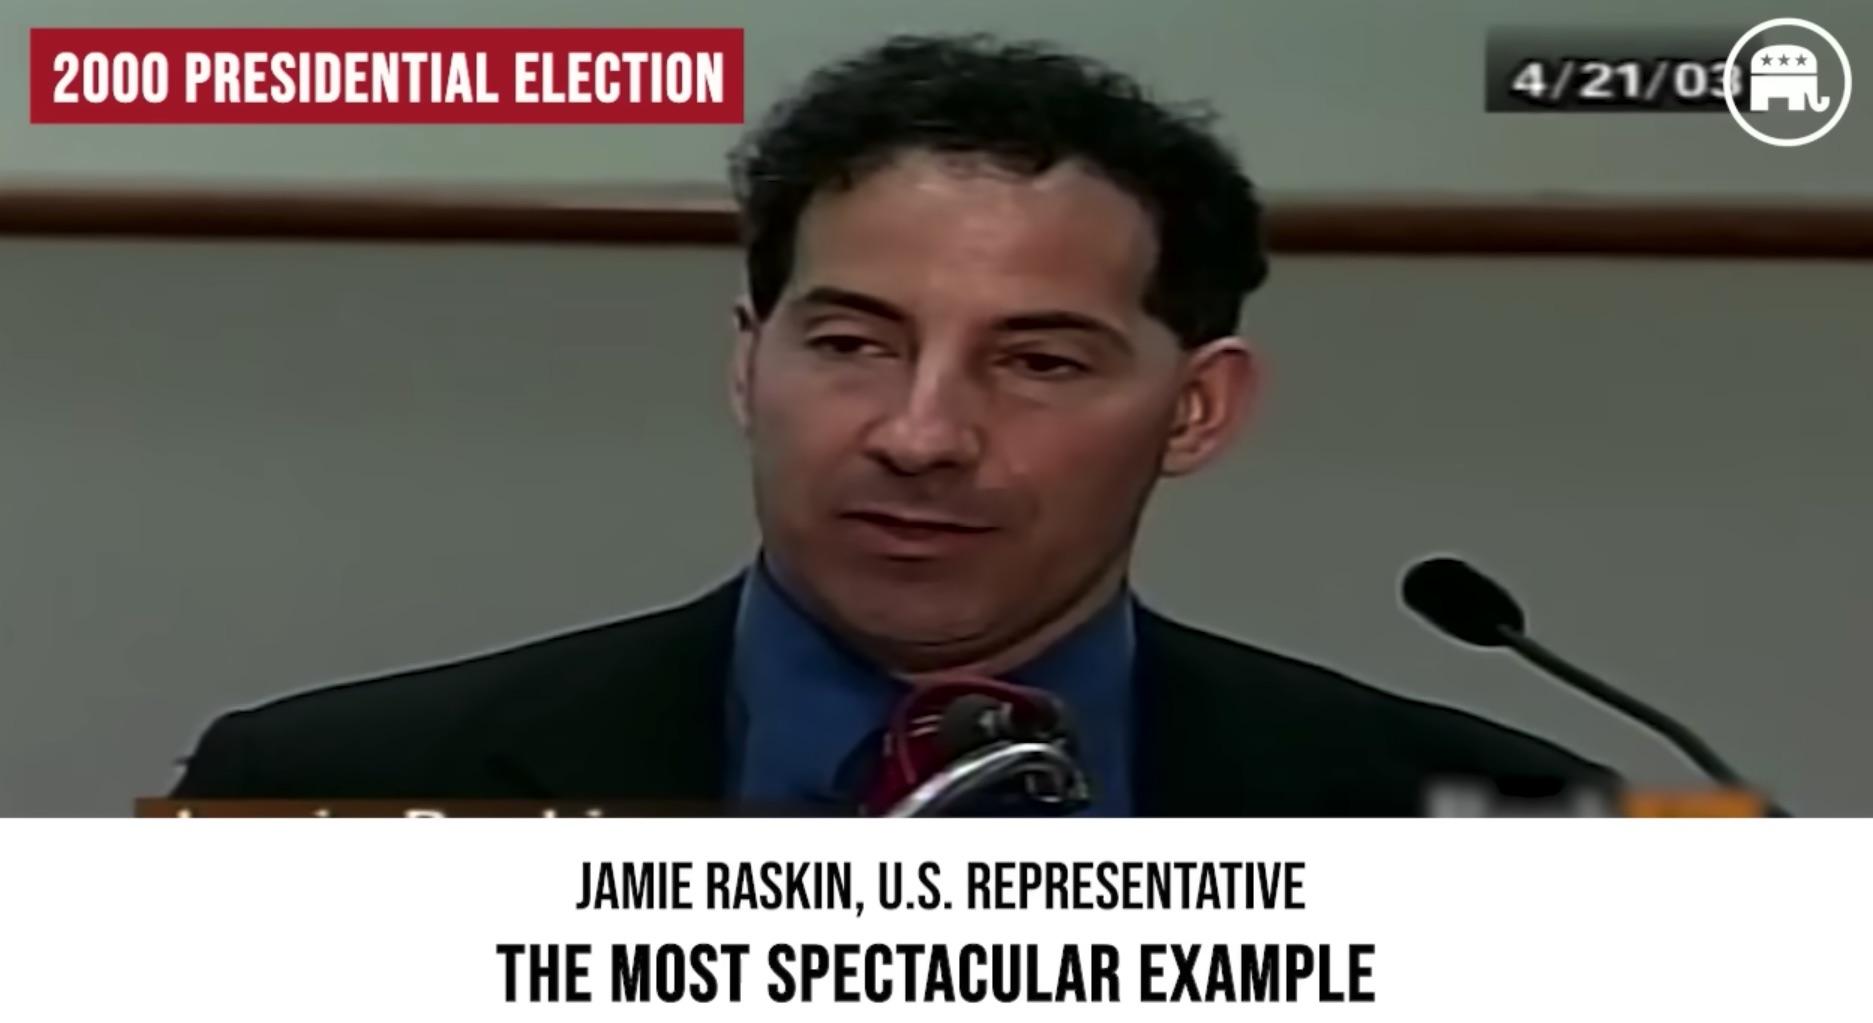 2000 PRESIDENTIAL ELECTION 210fR JMIE RASKIN, U.S. REPRESENTATIVE THE MOST SPECTACULAR EXAMPLE 